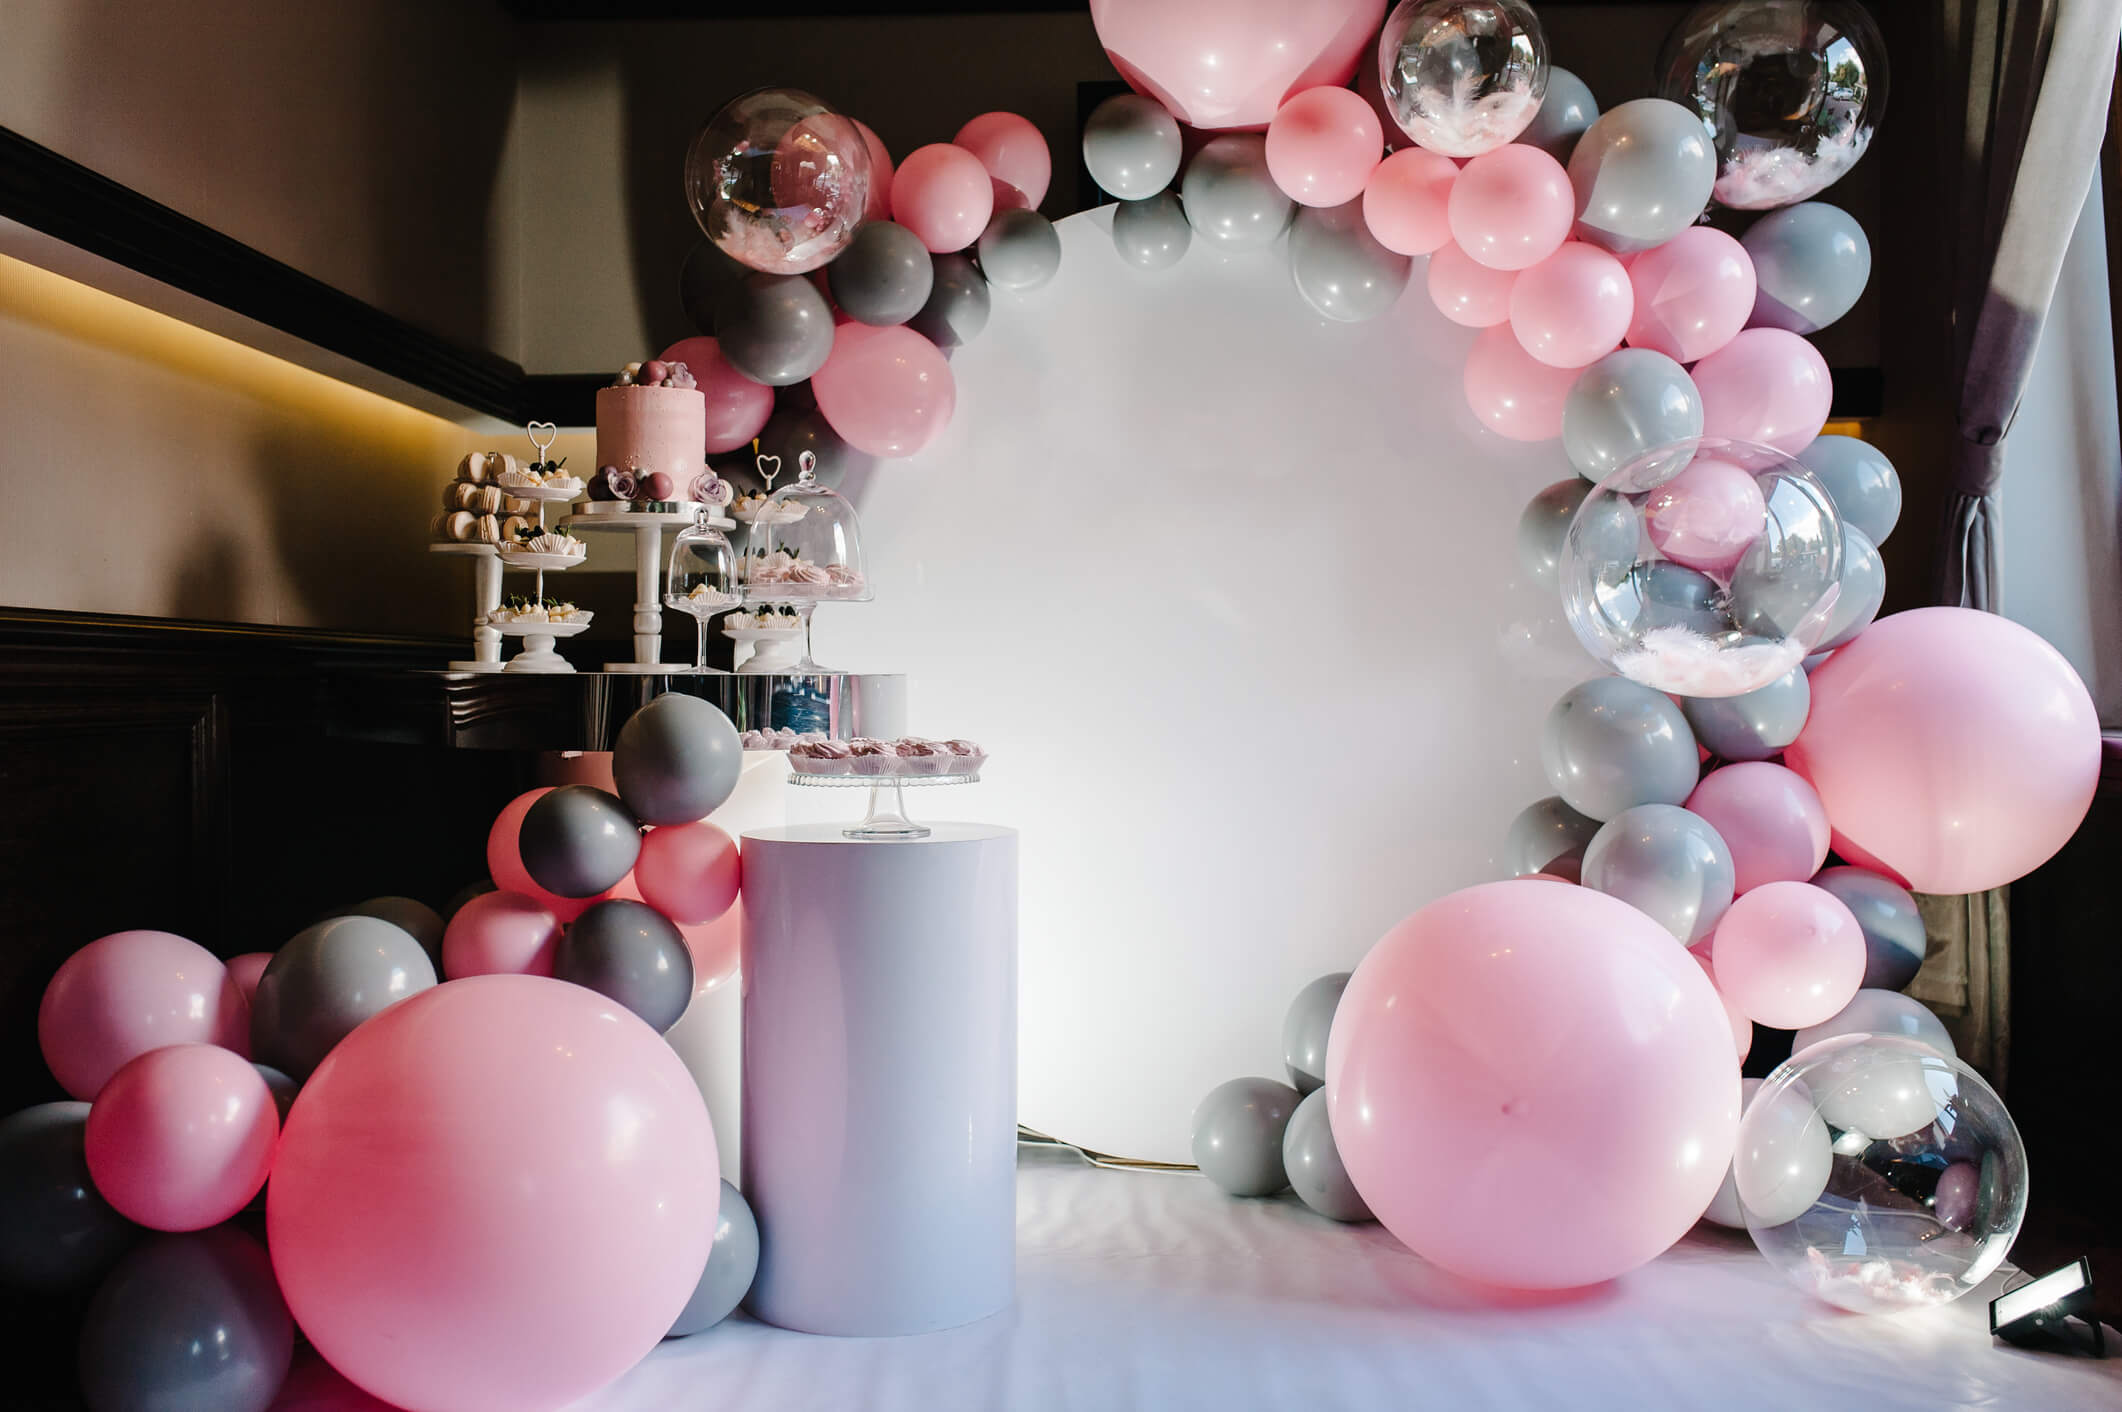 Serious Balloons - Balloon Decor, Events, Wedding Decorations